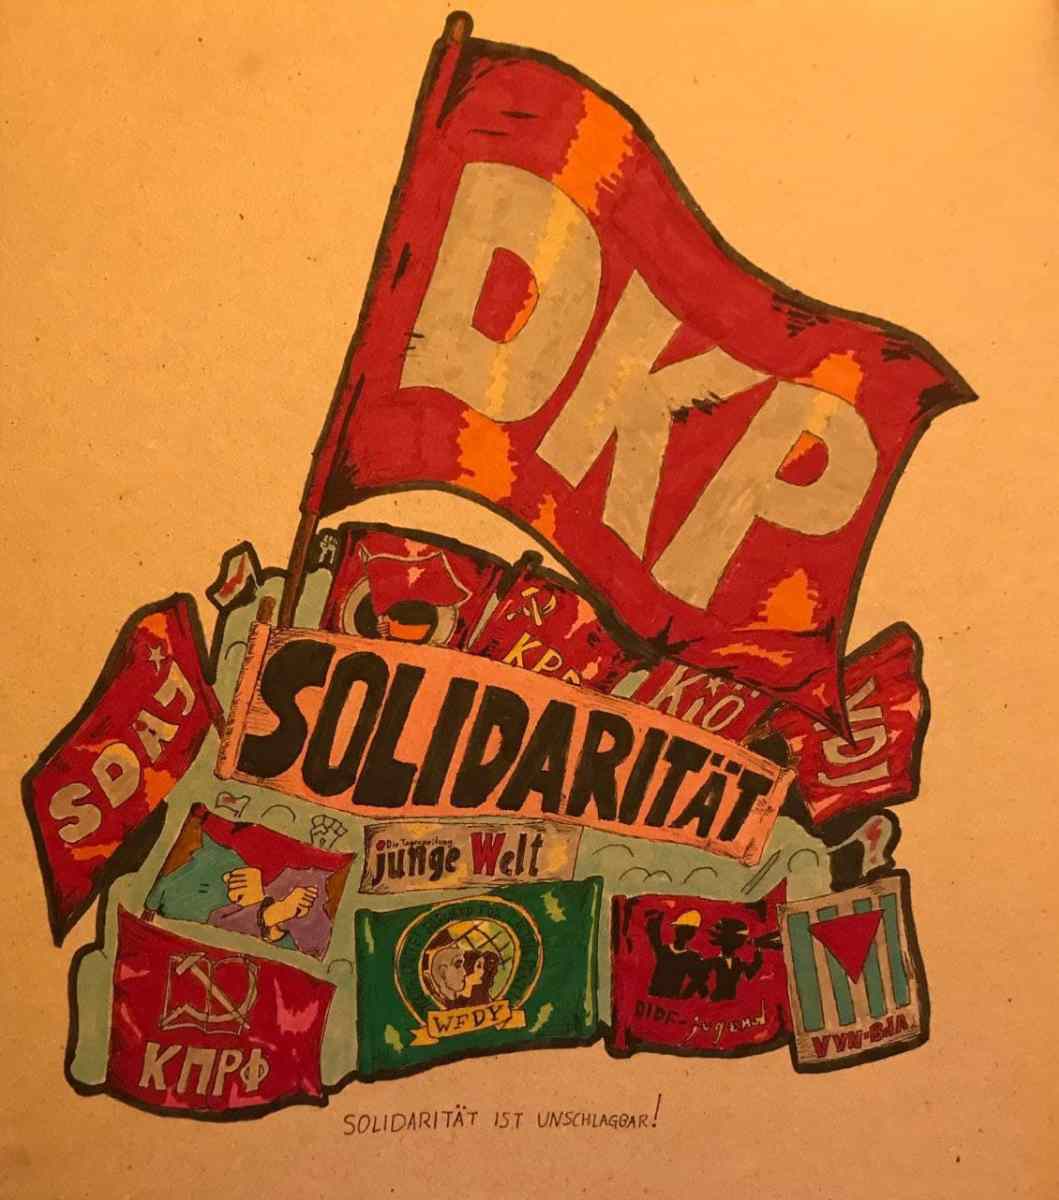 16 Soli - Frist ist Frist, aber Partei ist Partei - DKP, Podcast, Repression - Vermischtes